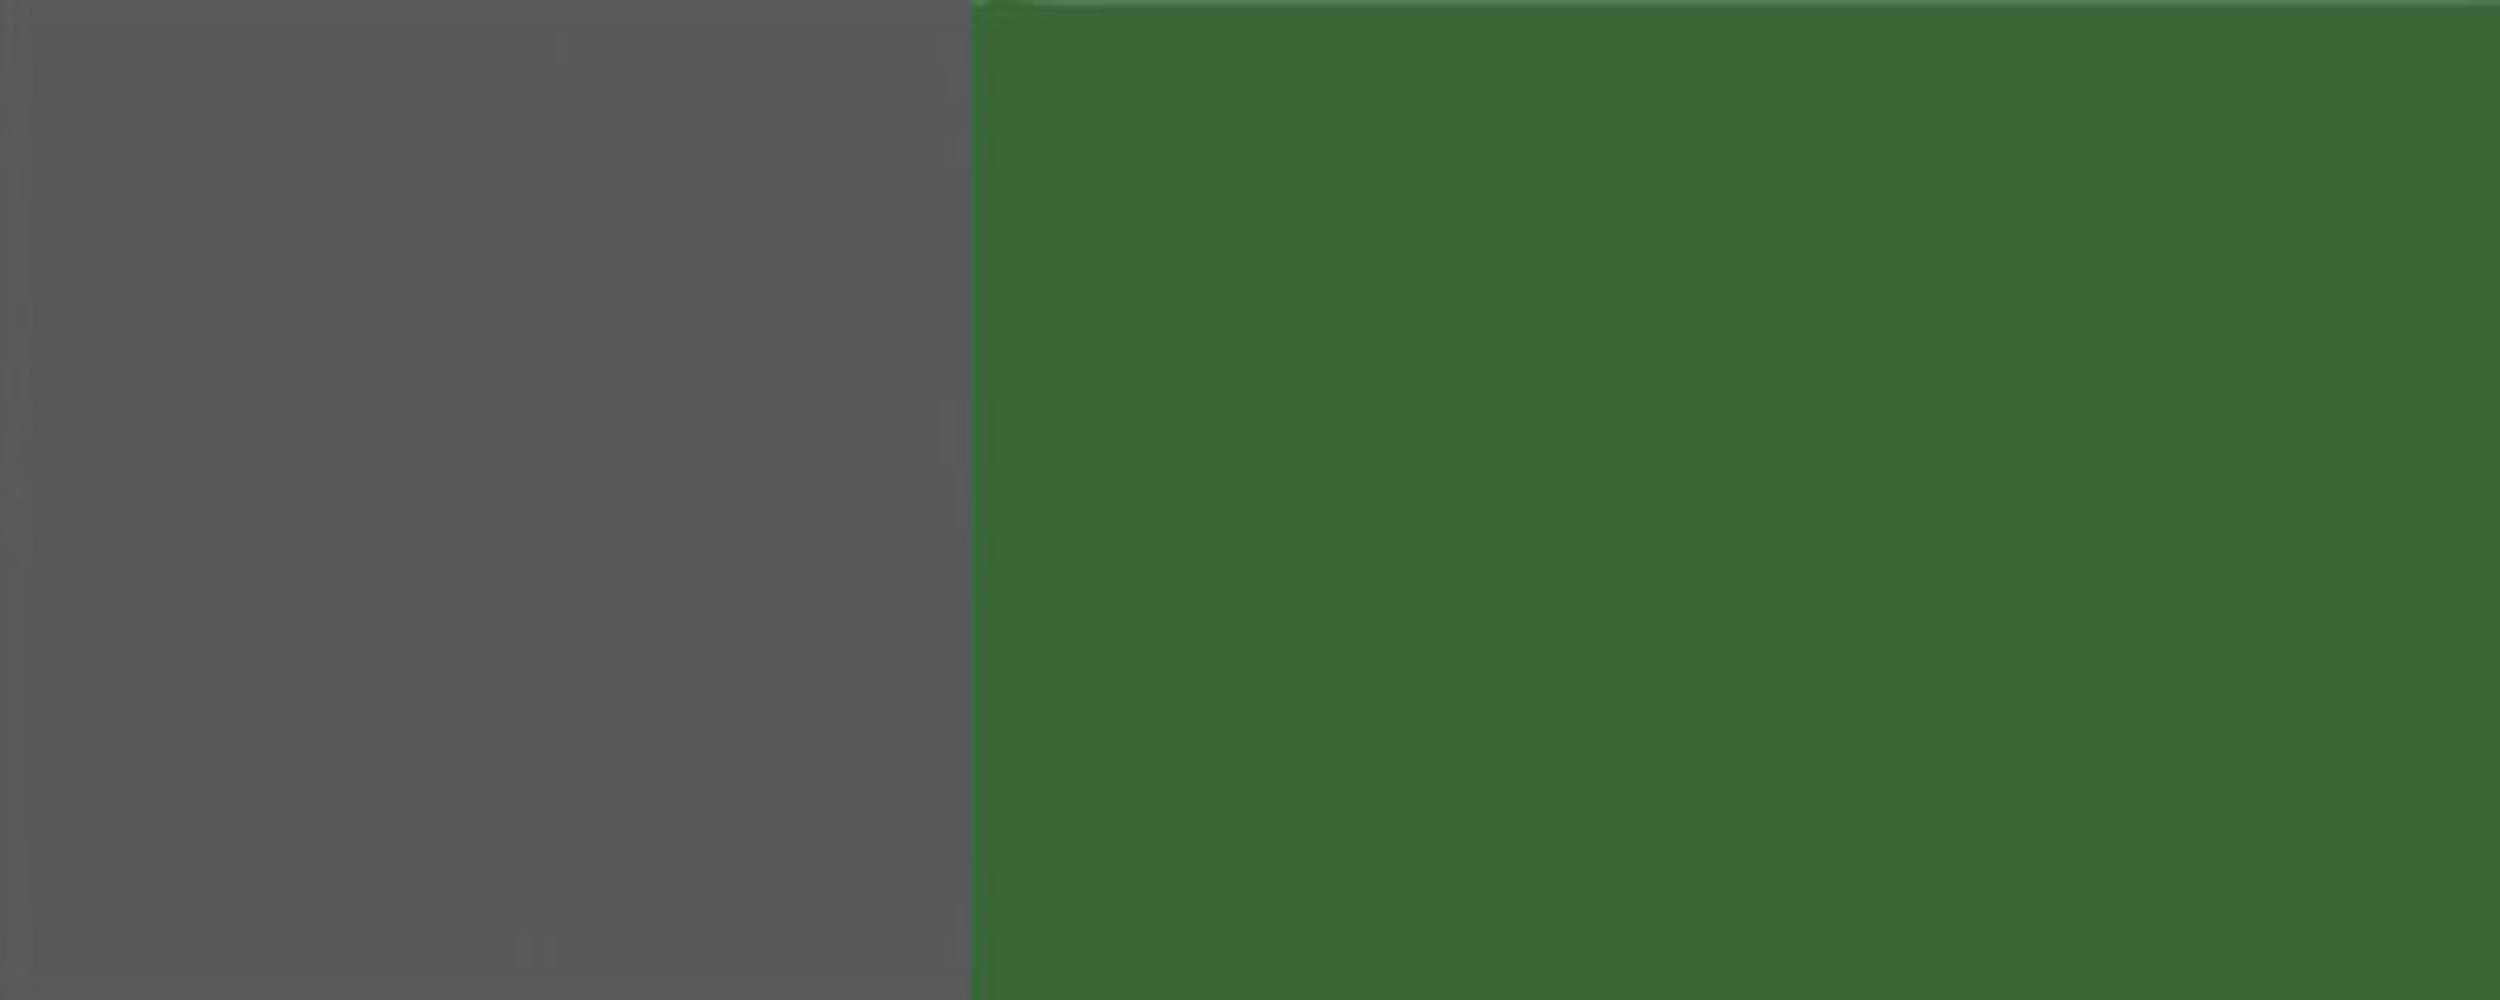 Feldmann-Wohnen Glashängeschrank Florence (Florence) 60cm RAL Korpusfarbe wählbar 6001 1-türig smaragdgrün Ausführung grifflos und Hochglanz Front